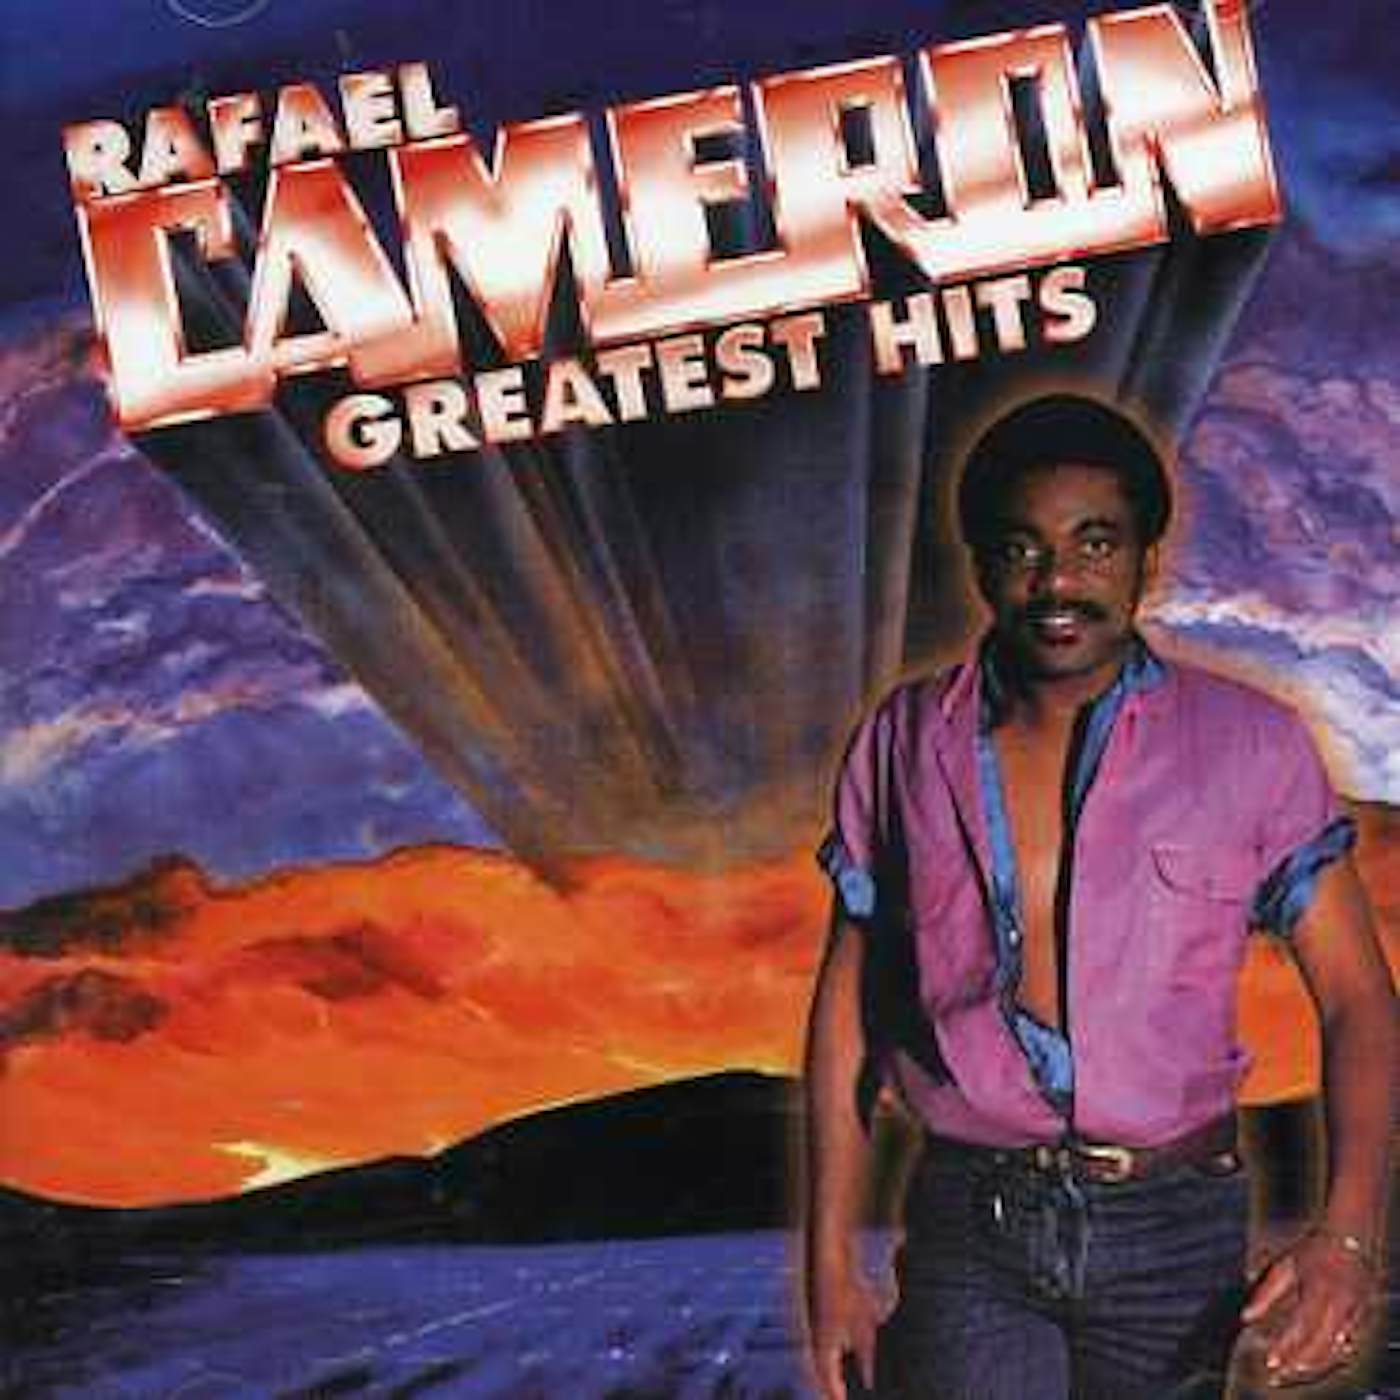 Rafael Cameron GREATEST HITS CD